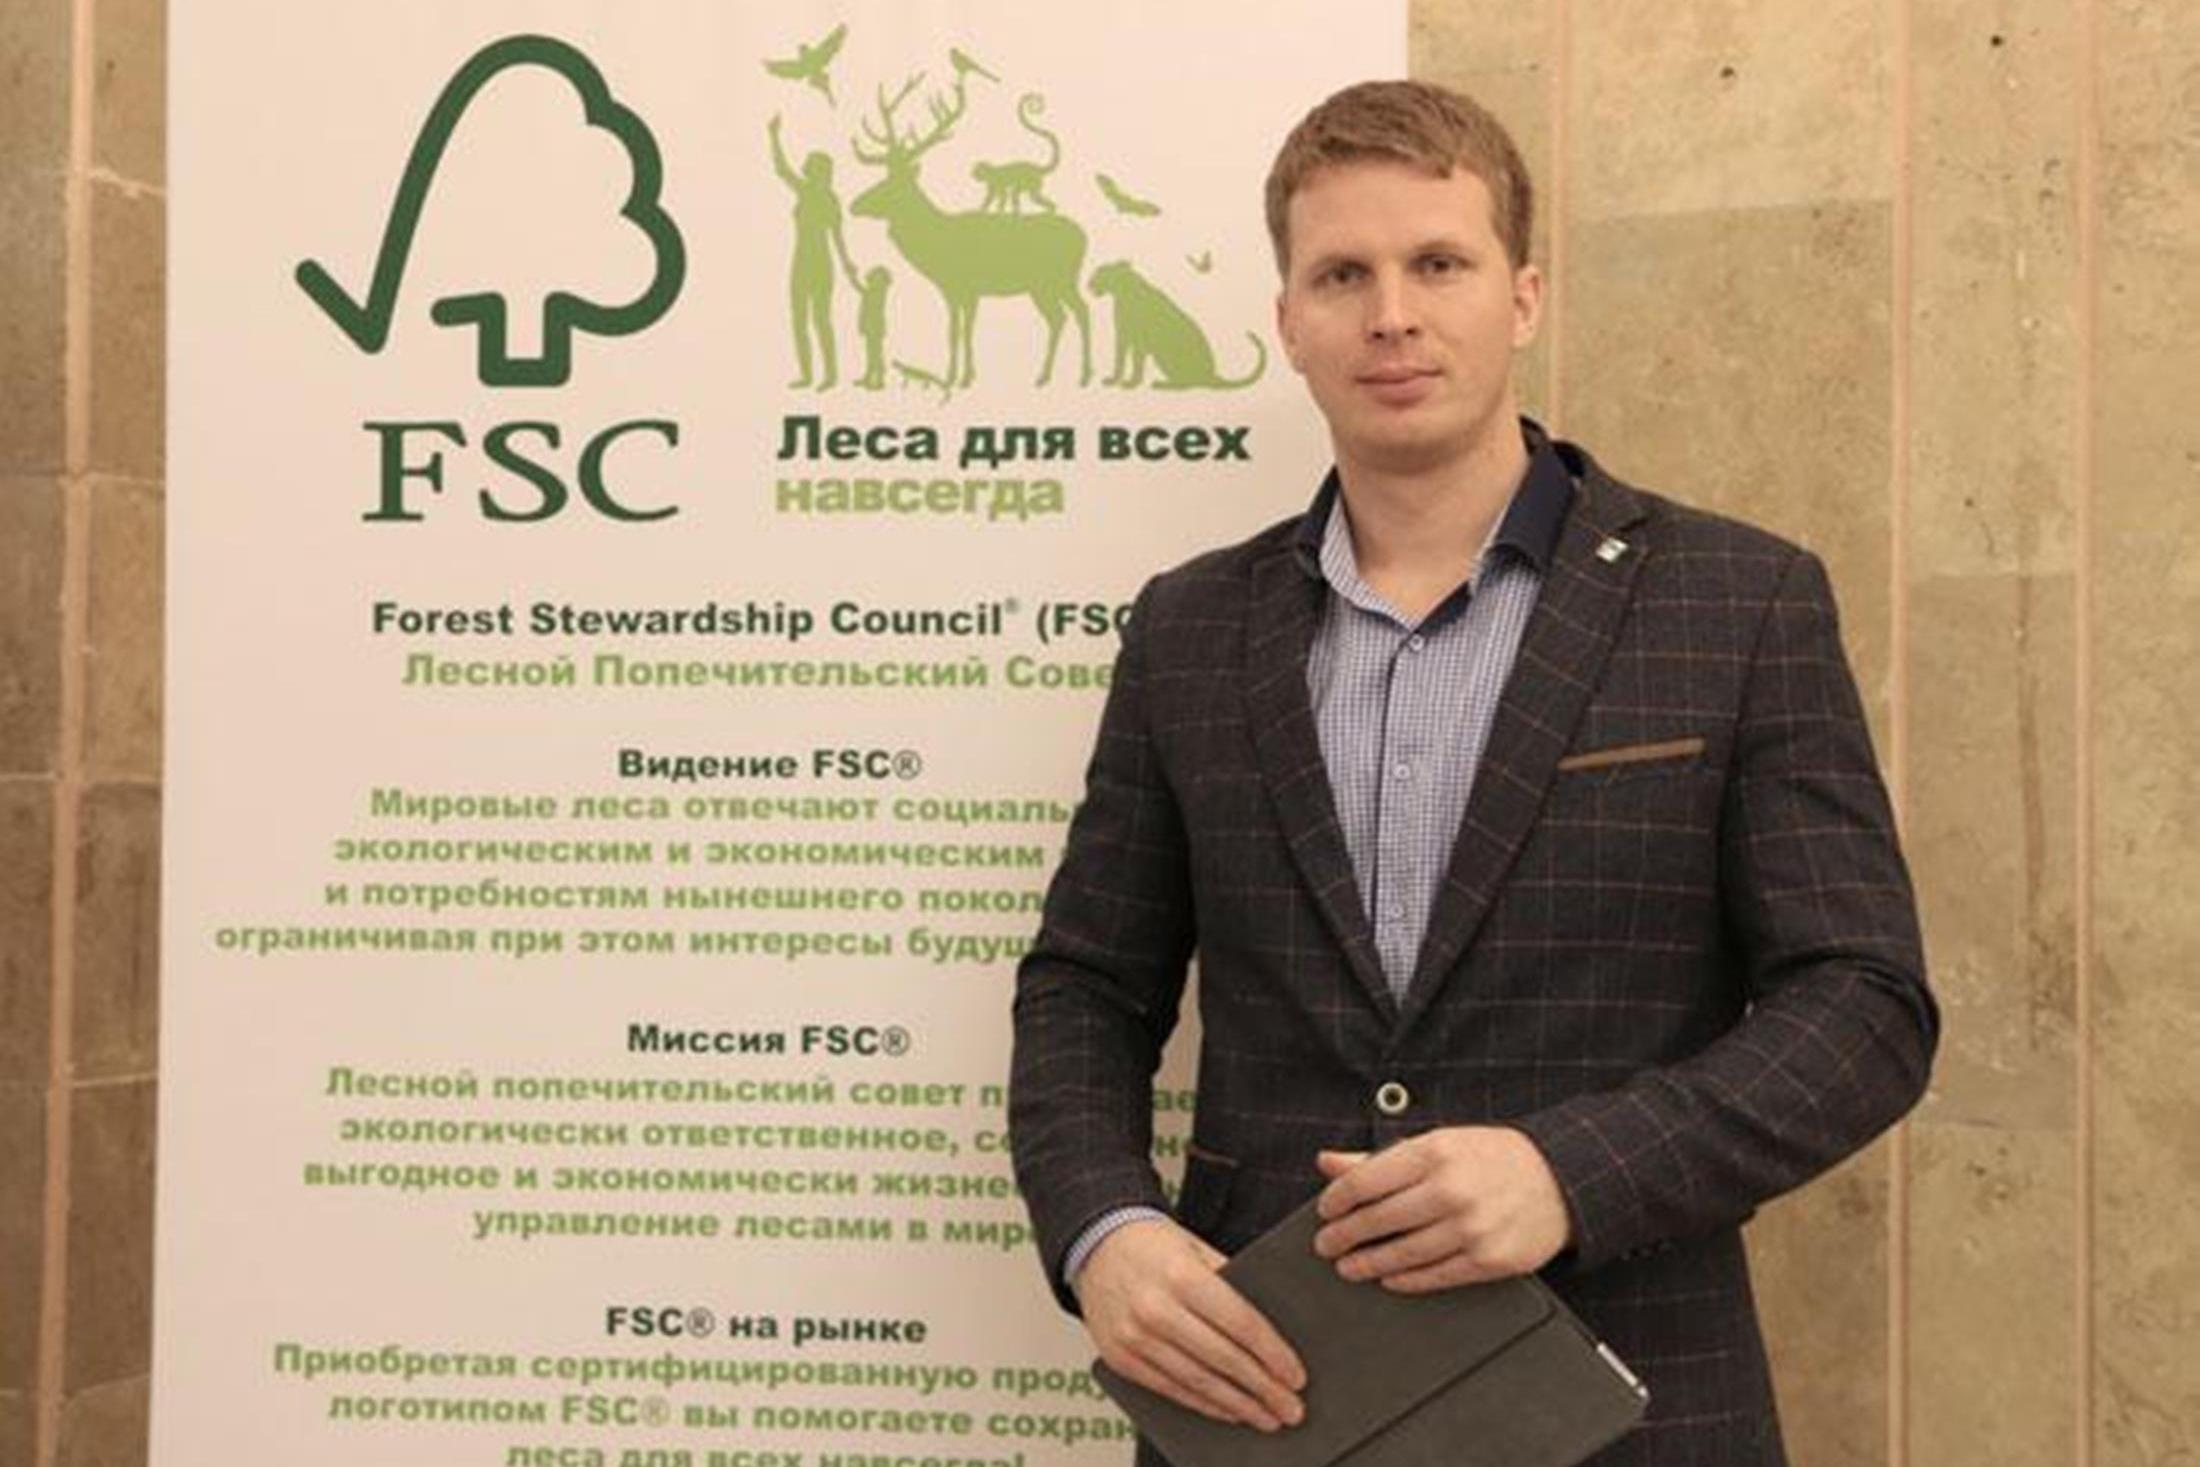 Лев Федорович, специалист по лесному хозяйству и национальный представитель FSC в Беларуси